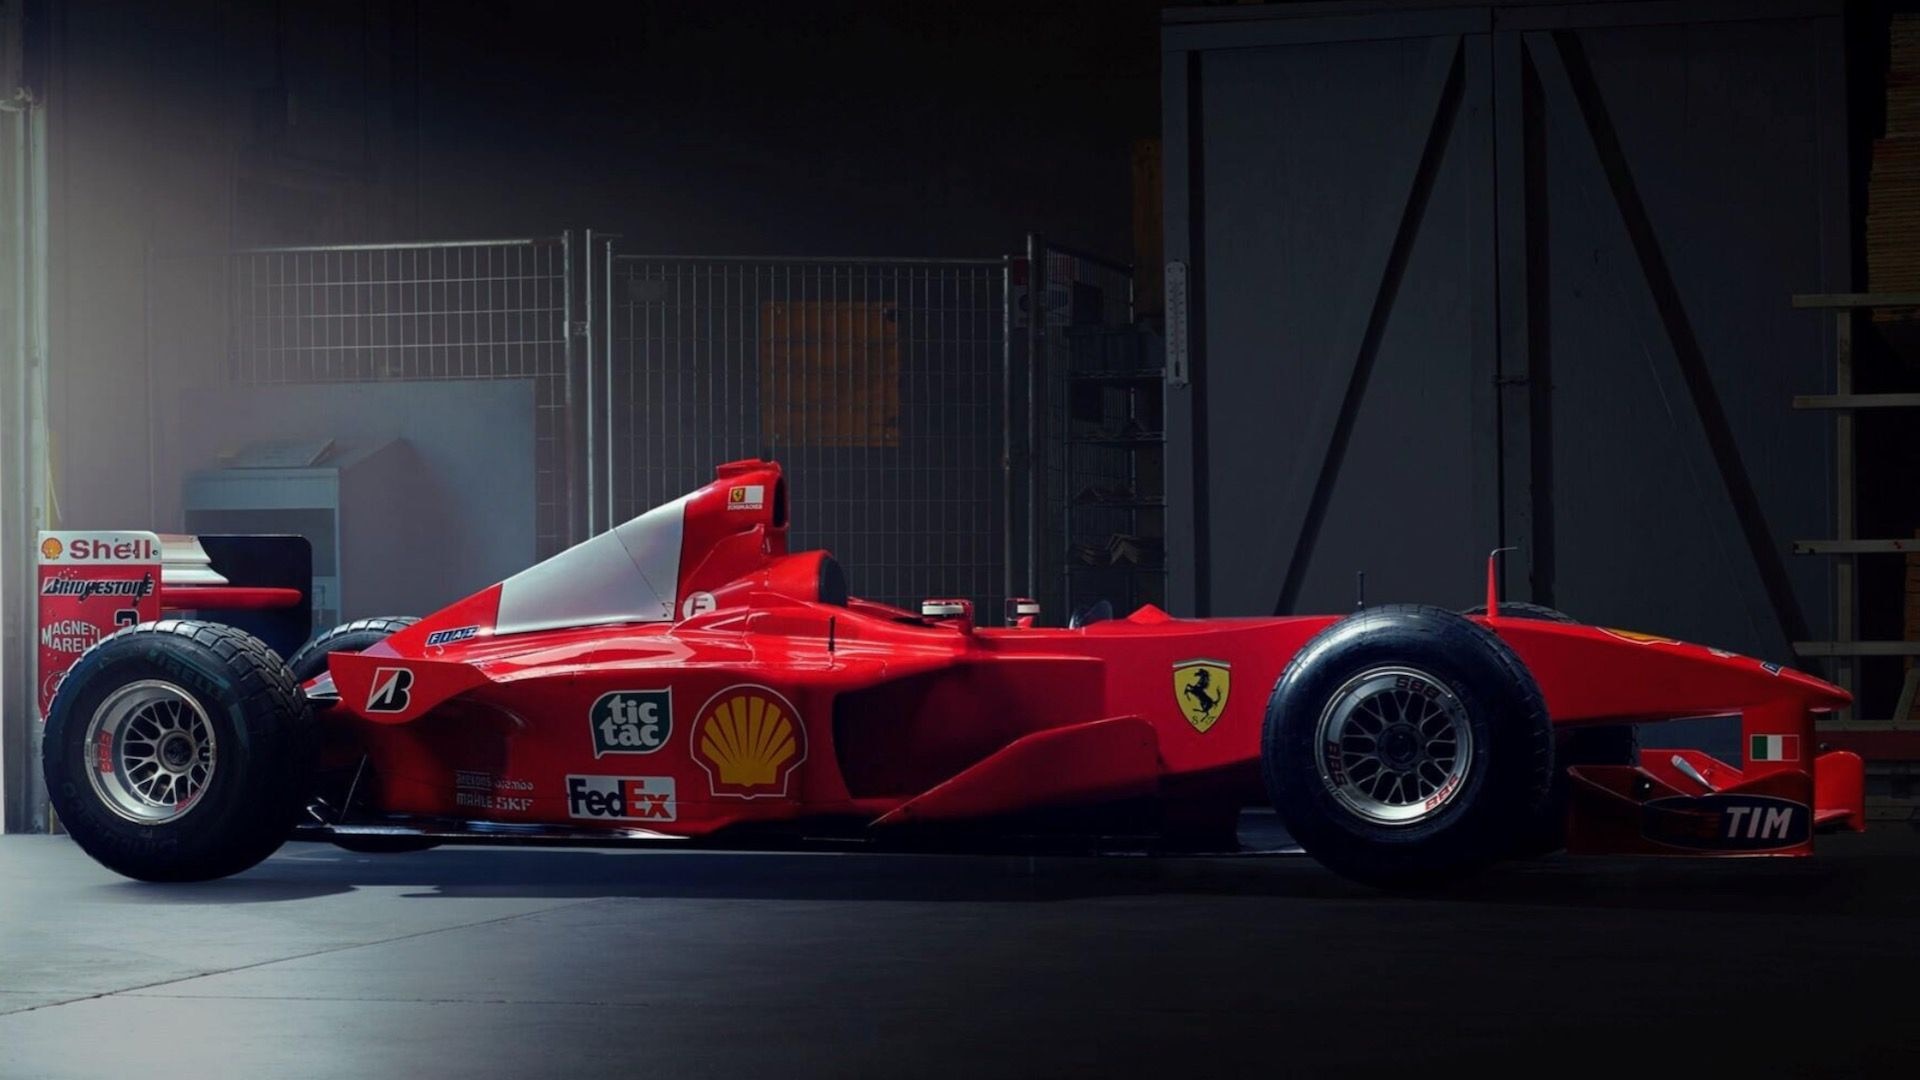 2000 Ferrari F2000 chassis 198 driven by Michael Schumacher (photo via RM Sotheby's)